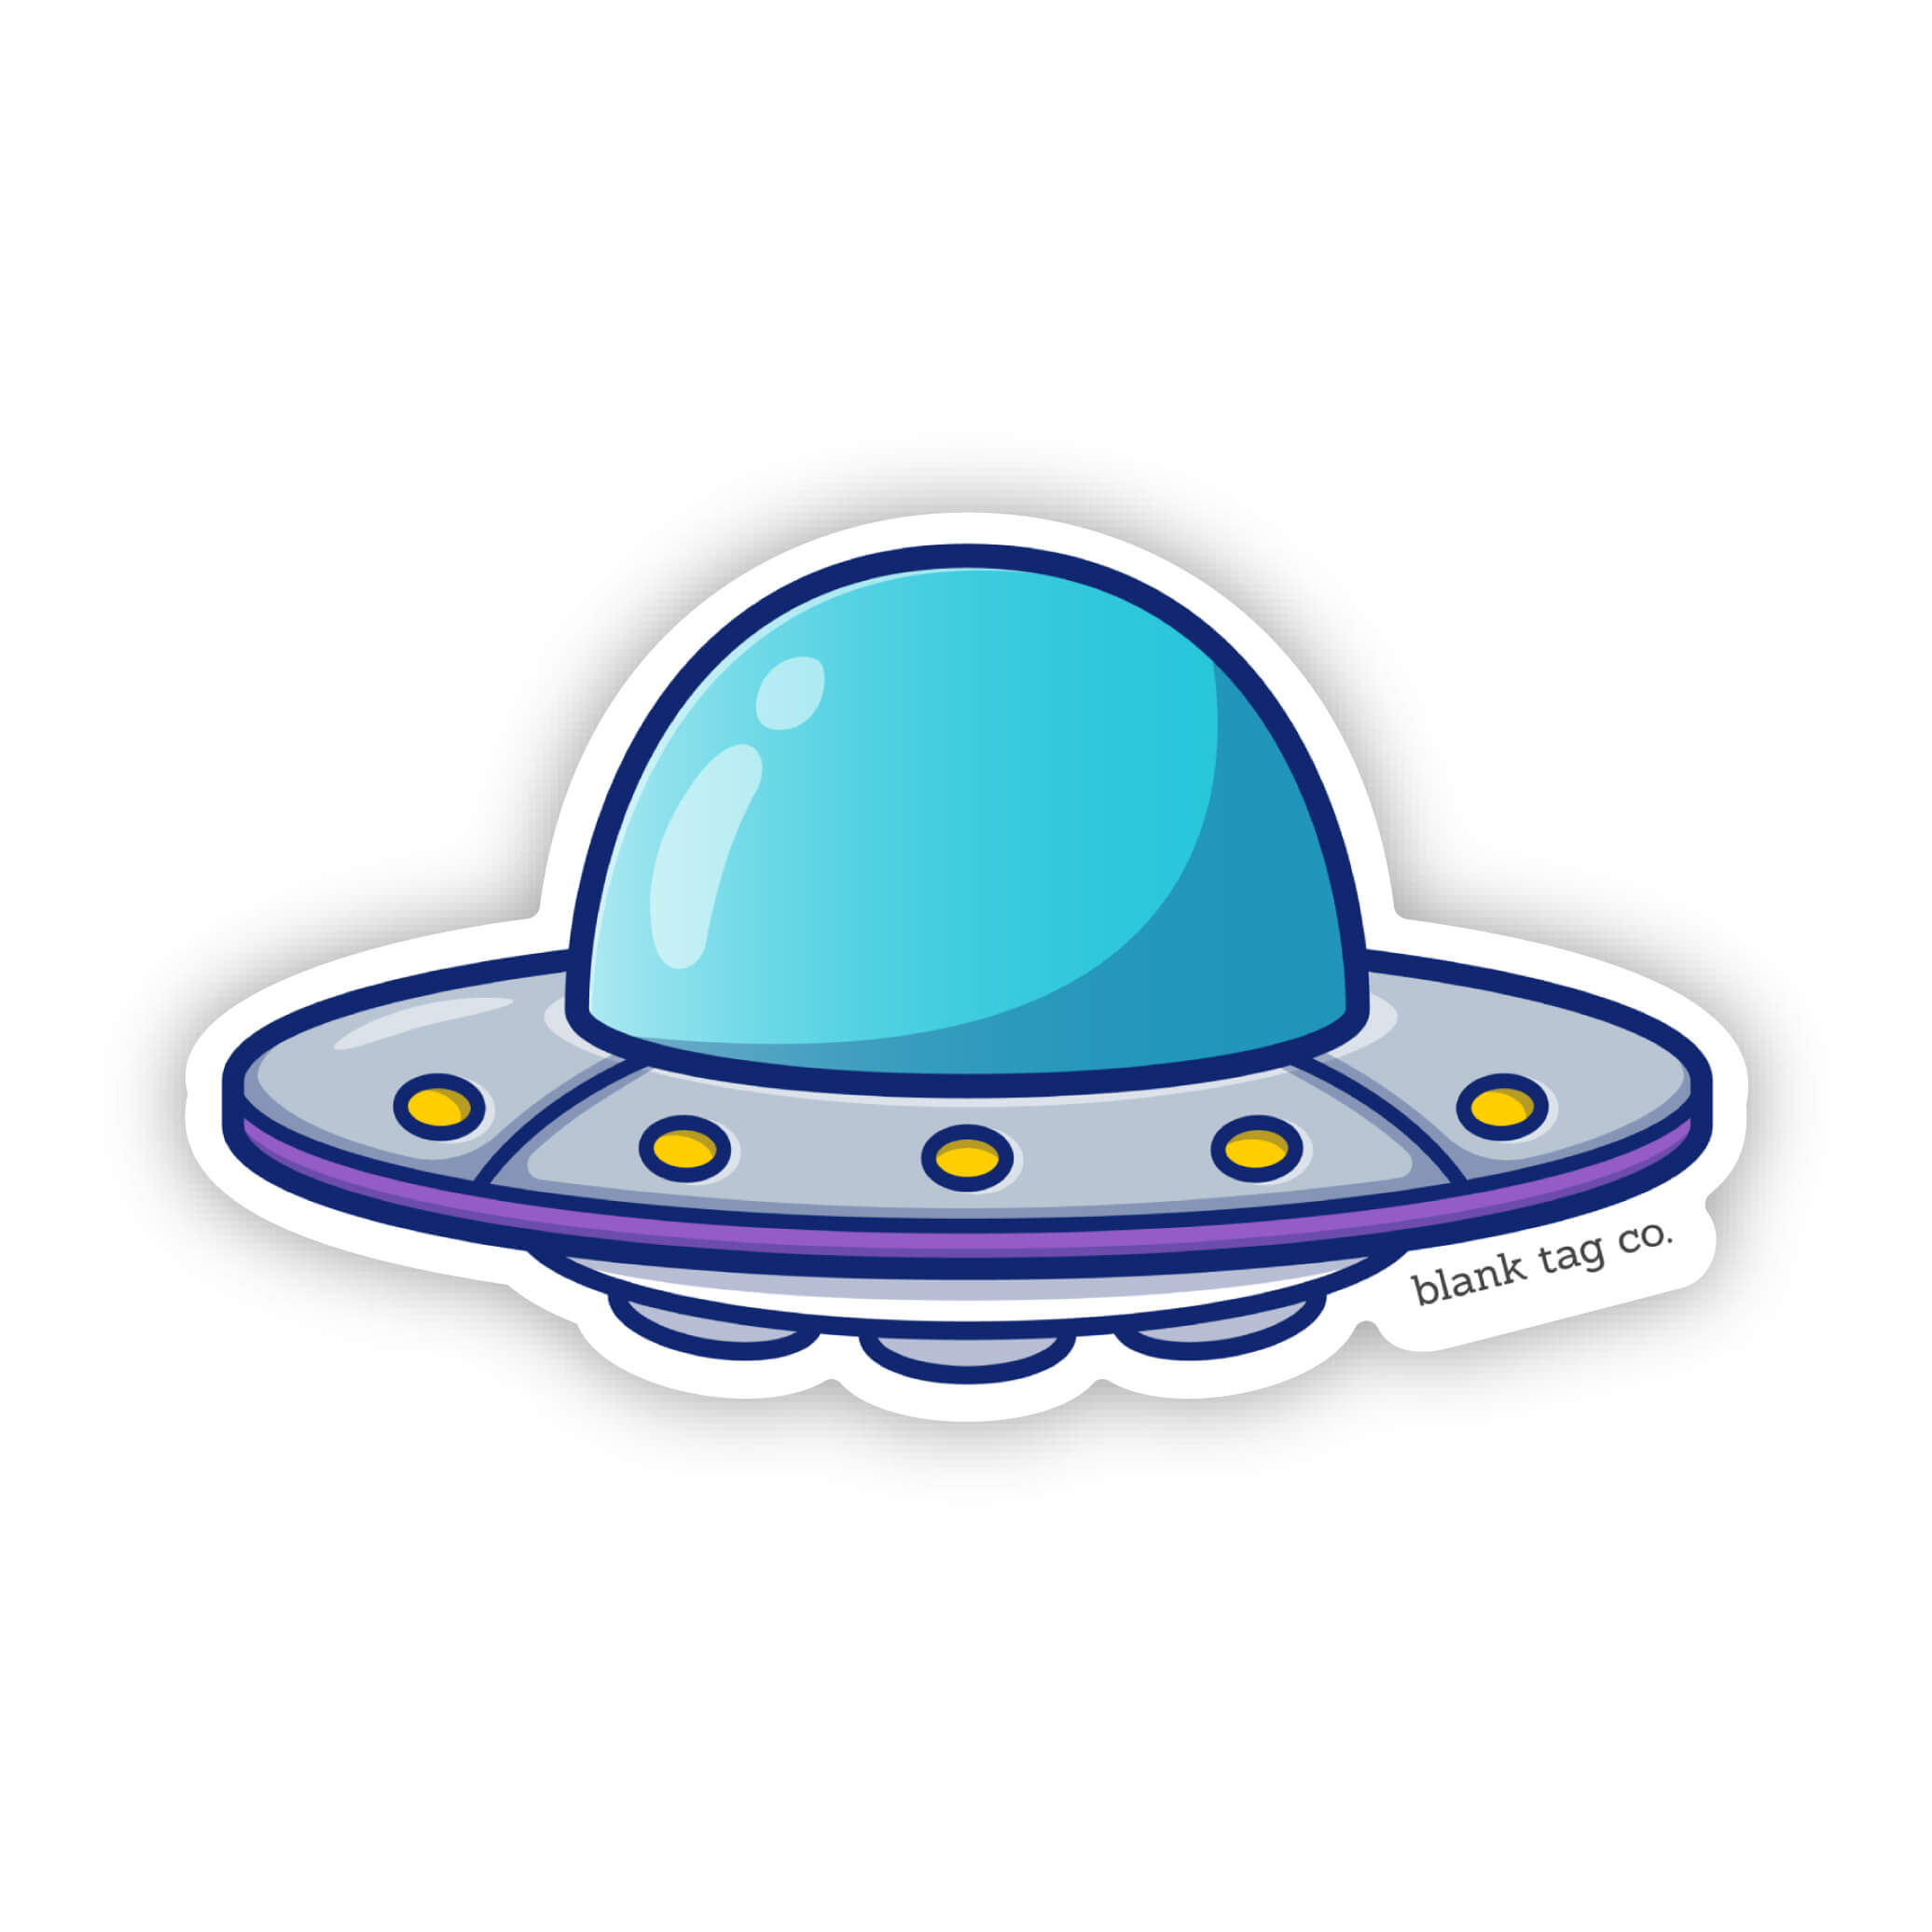 The UFO Sticker